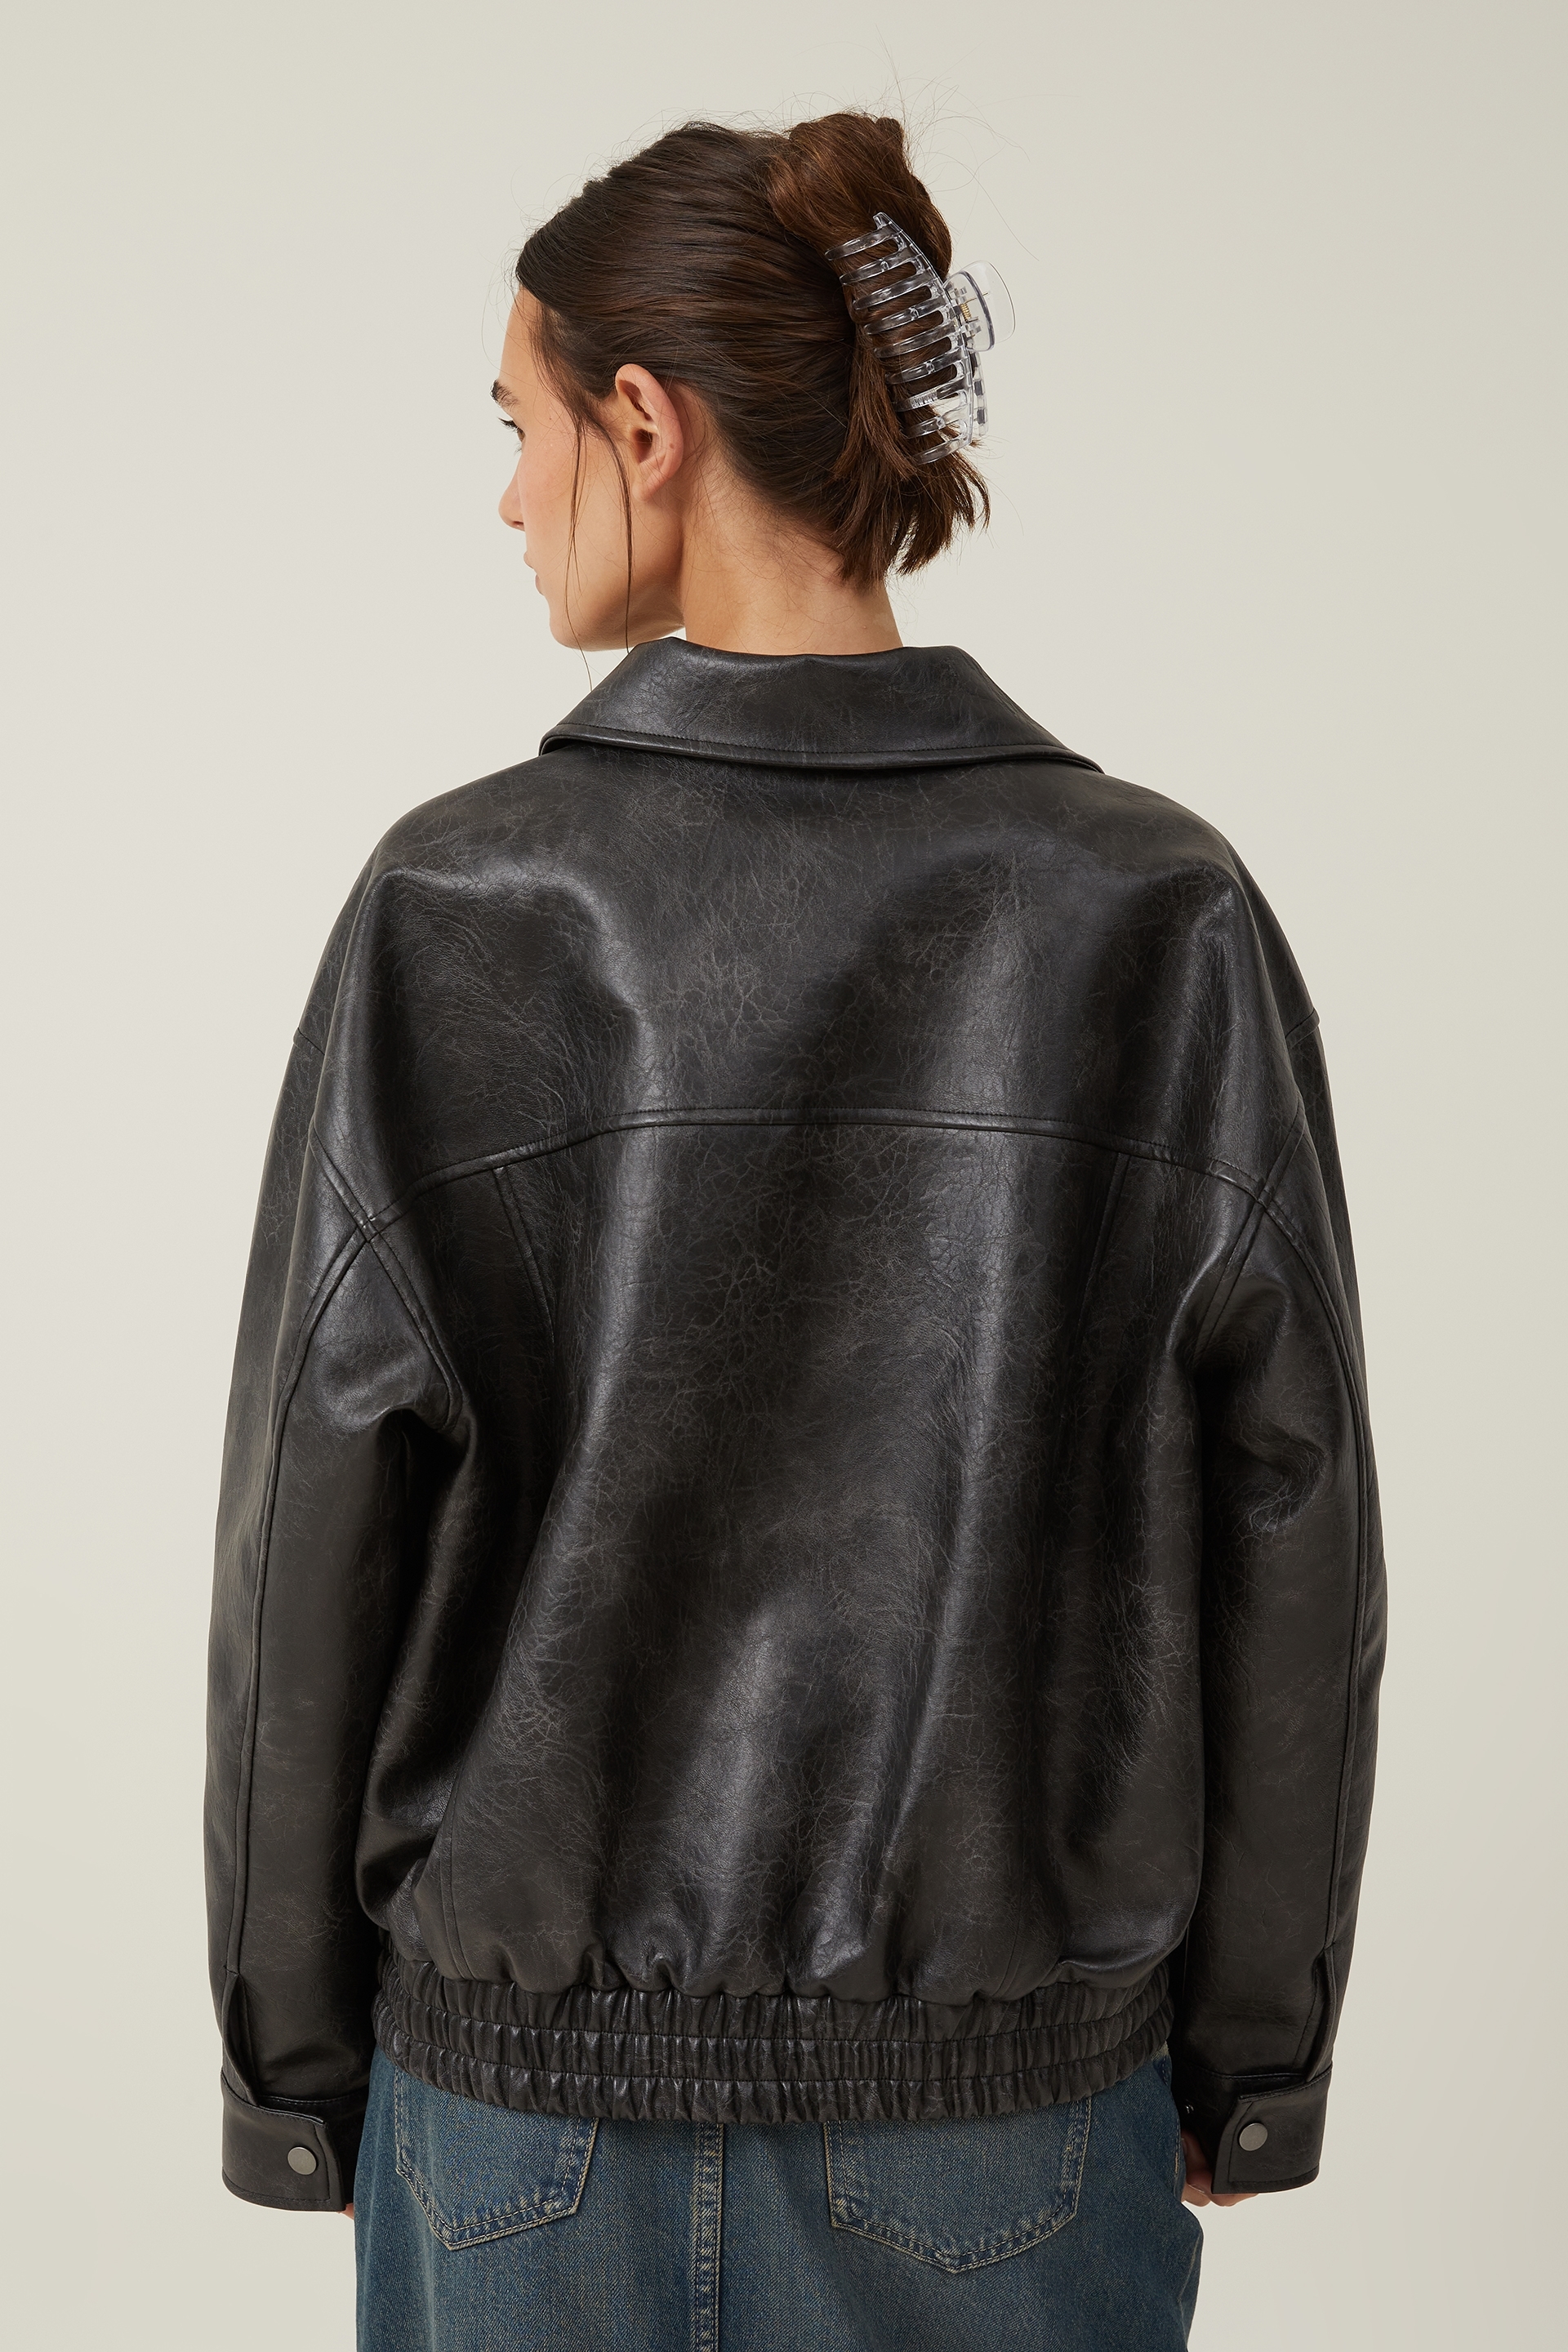 Cotton on Women - Faux Leather Bomber Jacket - Washed Black